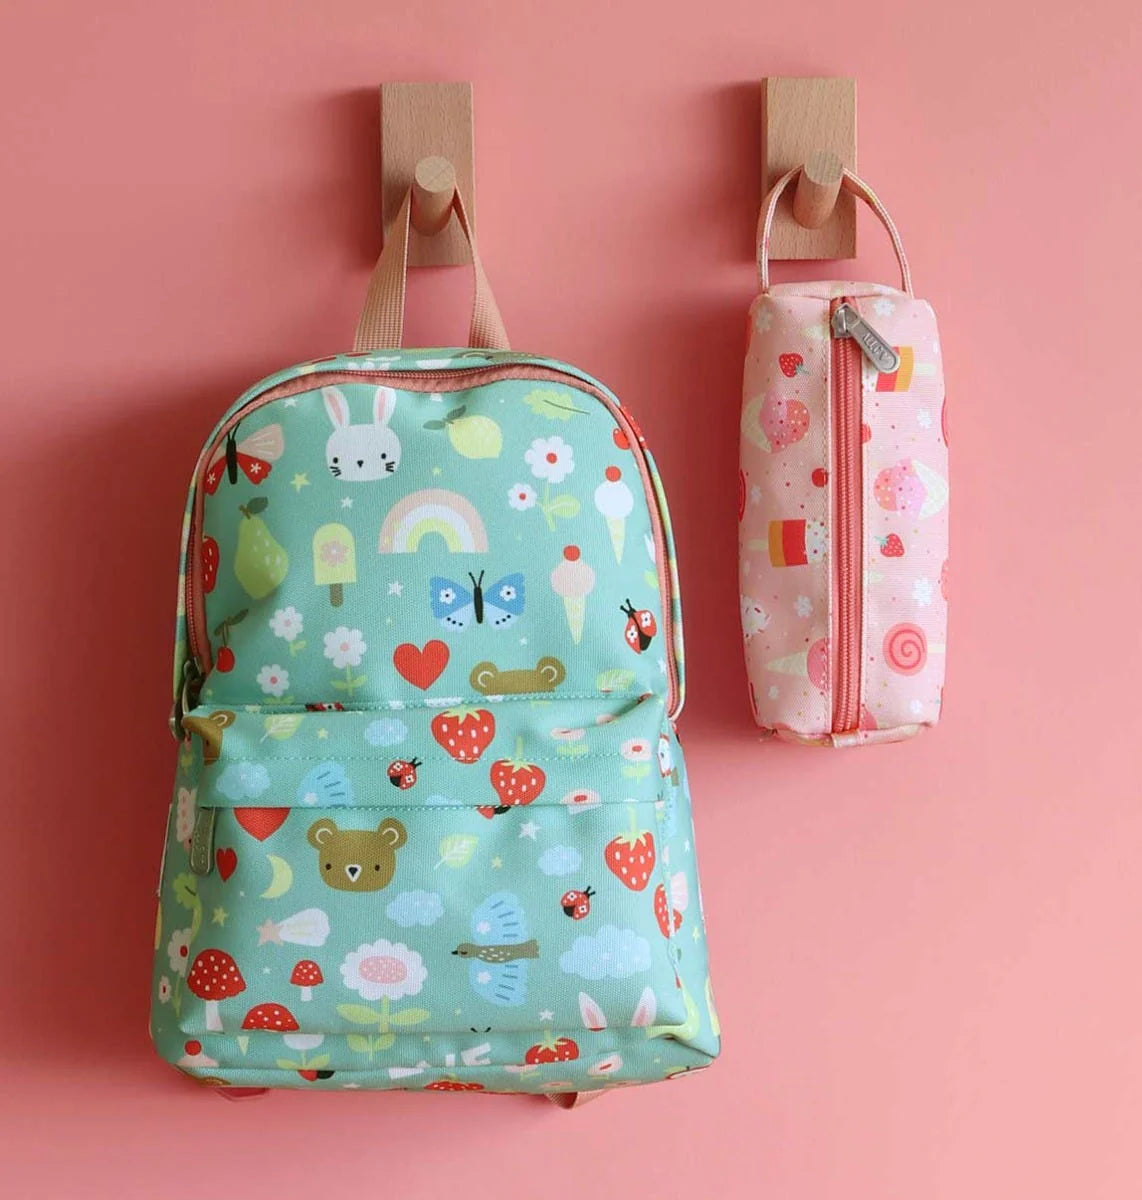 A LITTLE LOVELY COMPANY - Little backpack - Joy